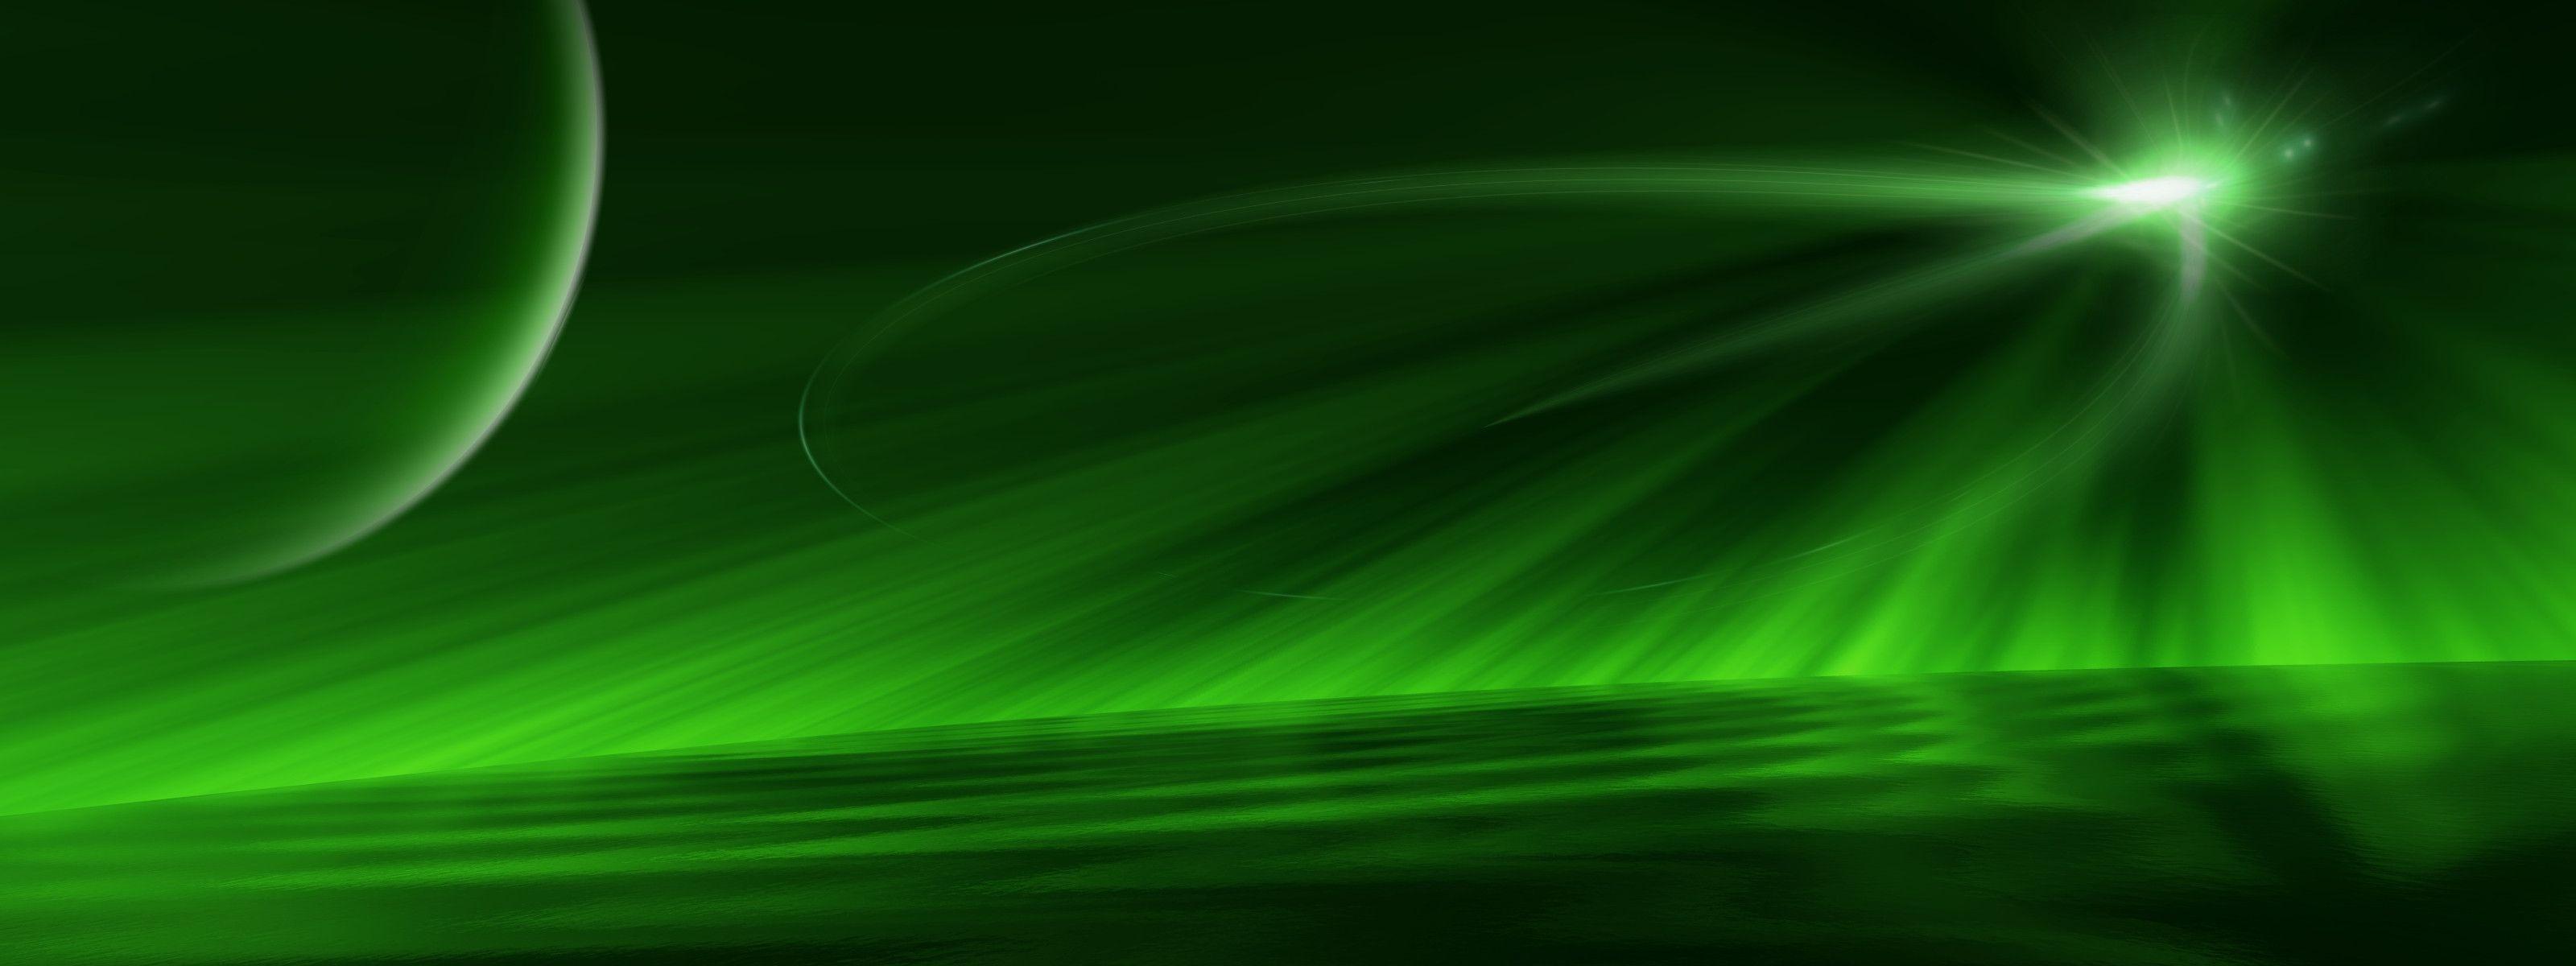 Green screen background 4k - gaiprima